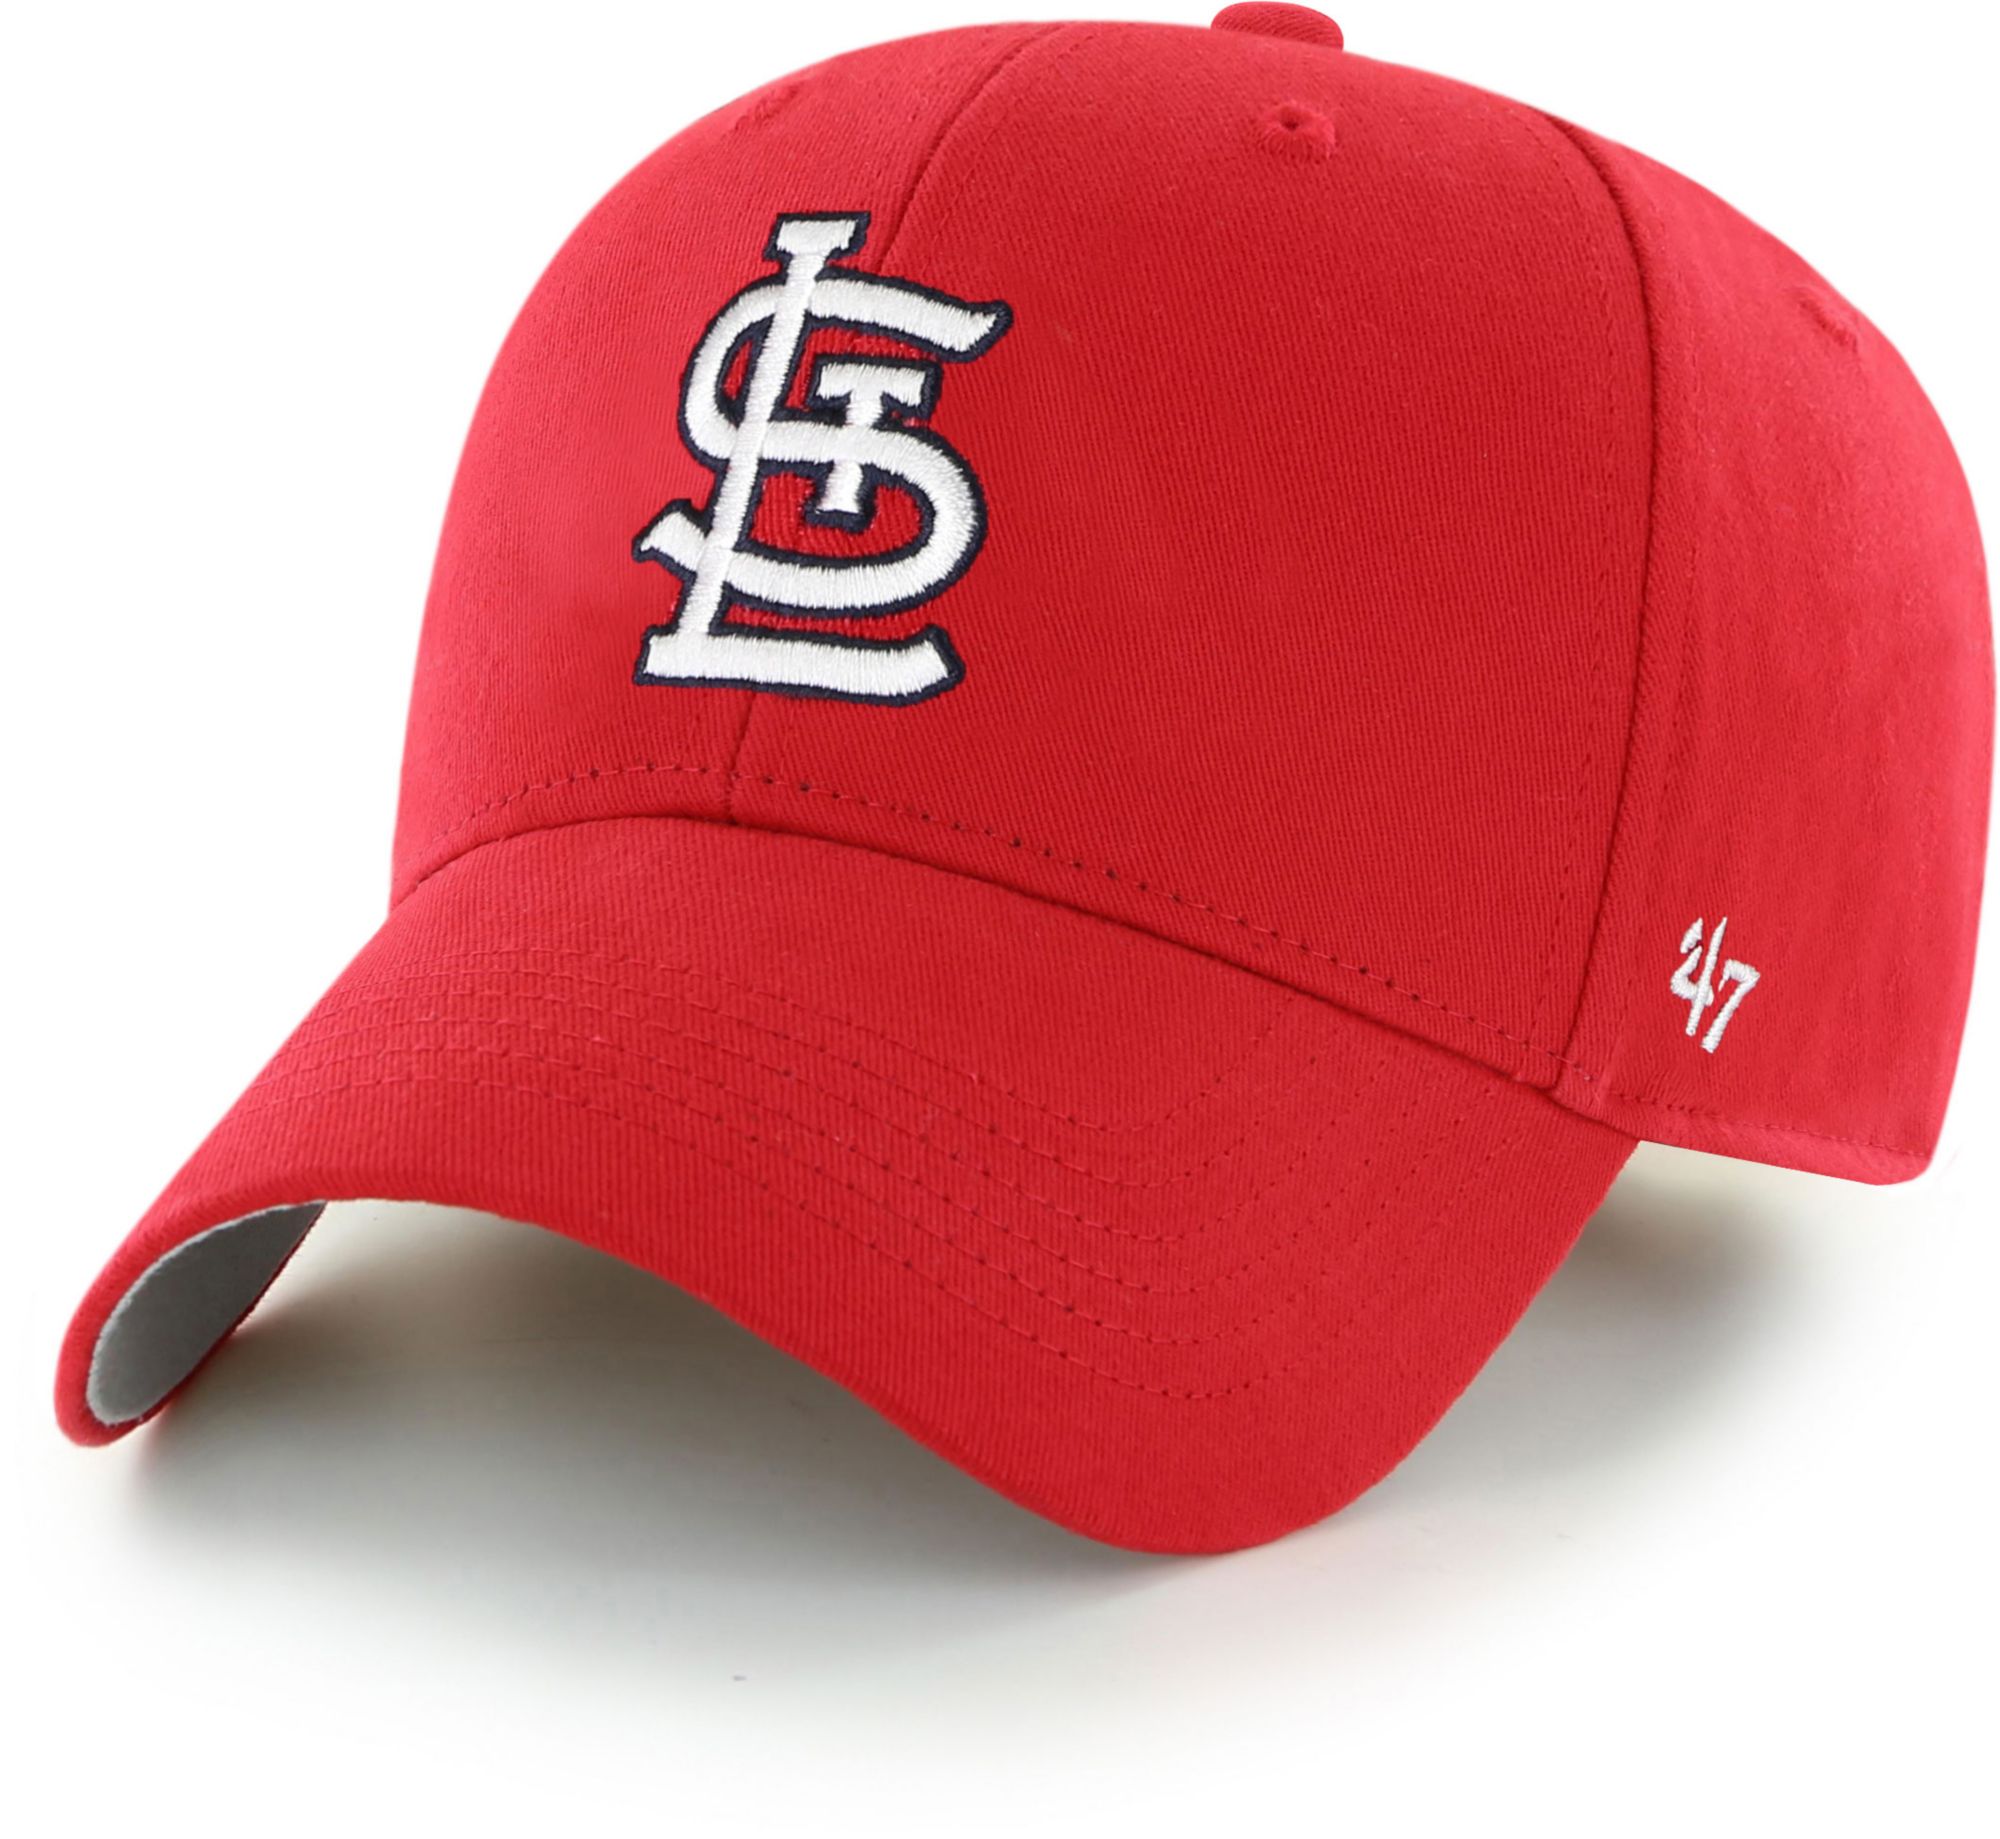 St. Louis Cardinals Camo Hats, Cardinals Camouflage Shirts, Gear